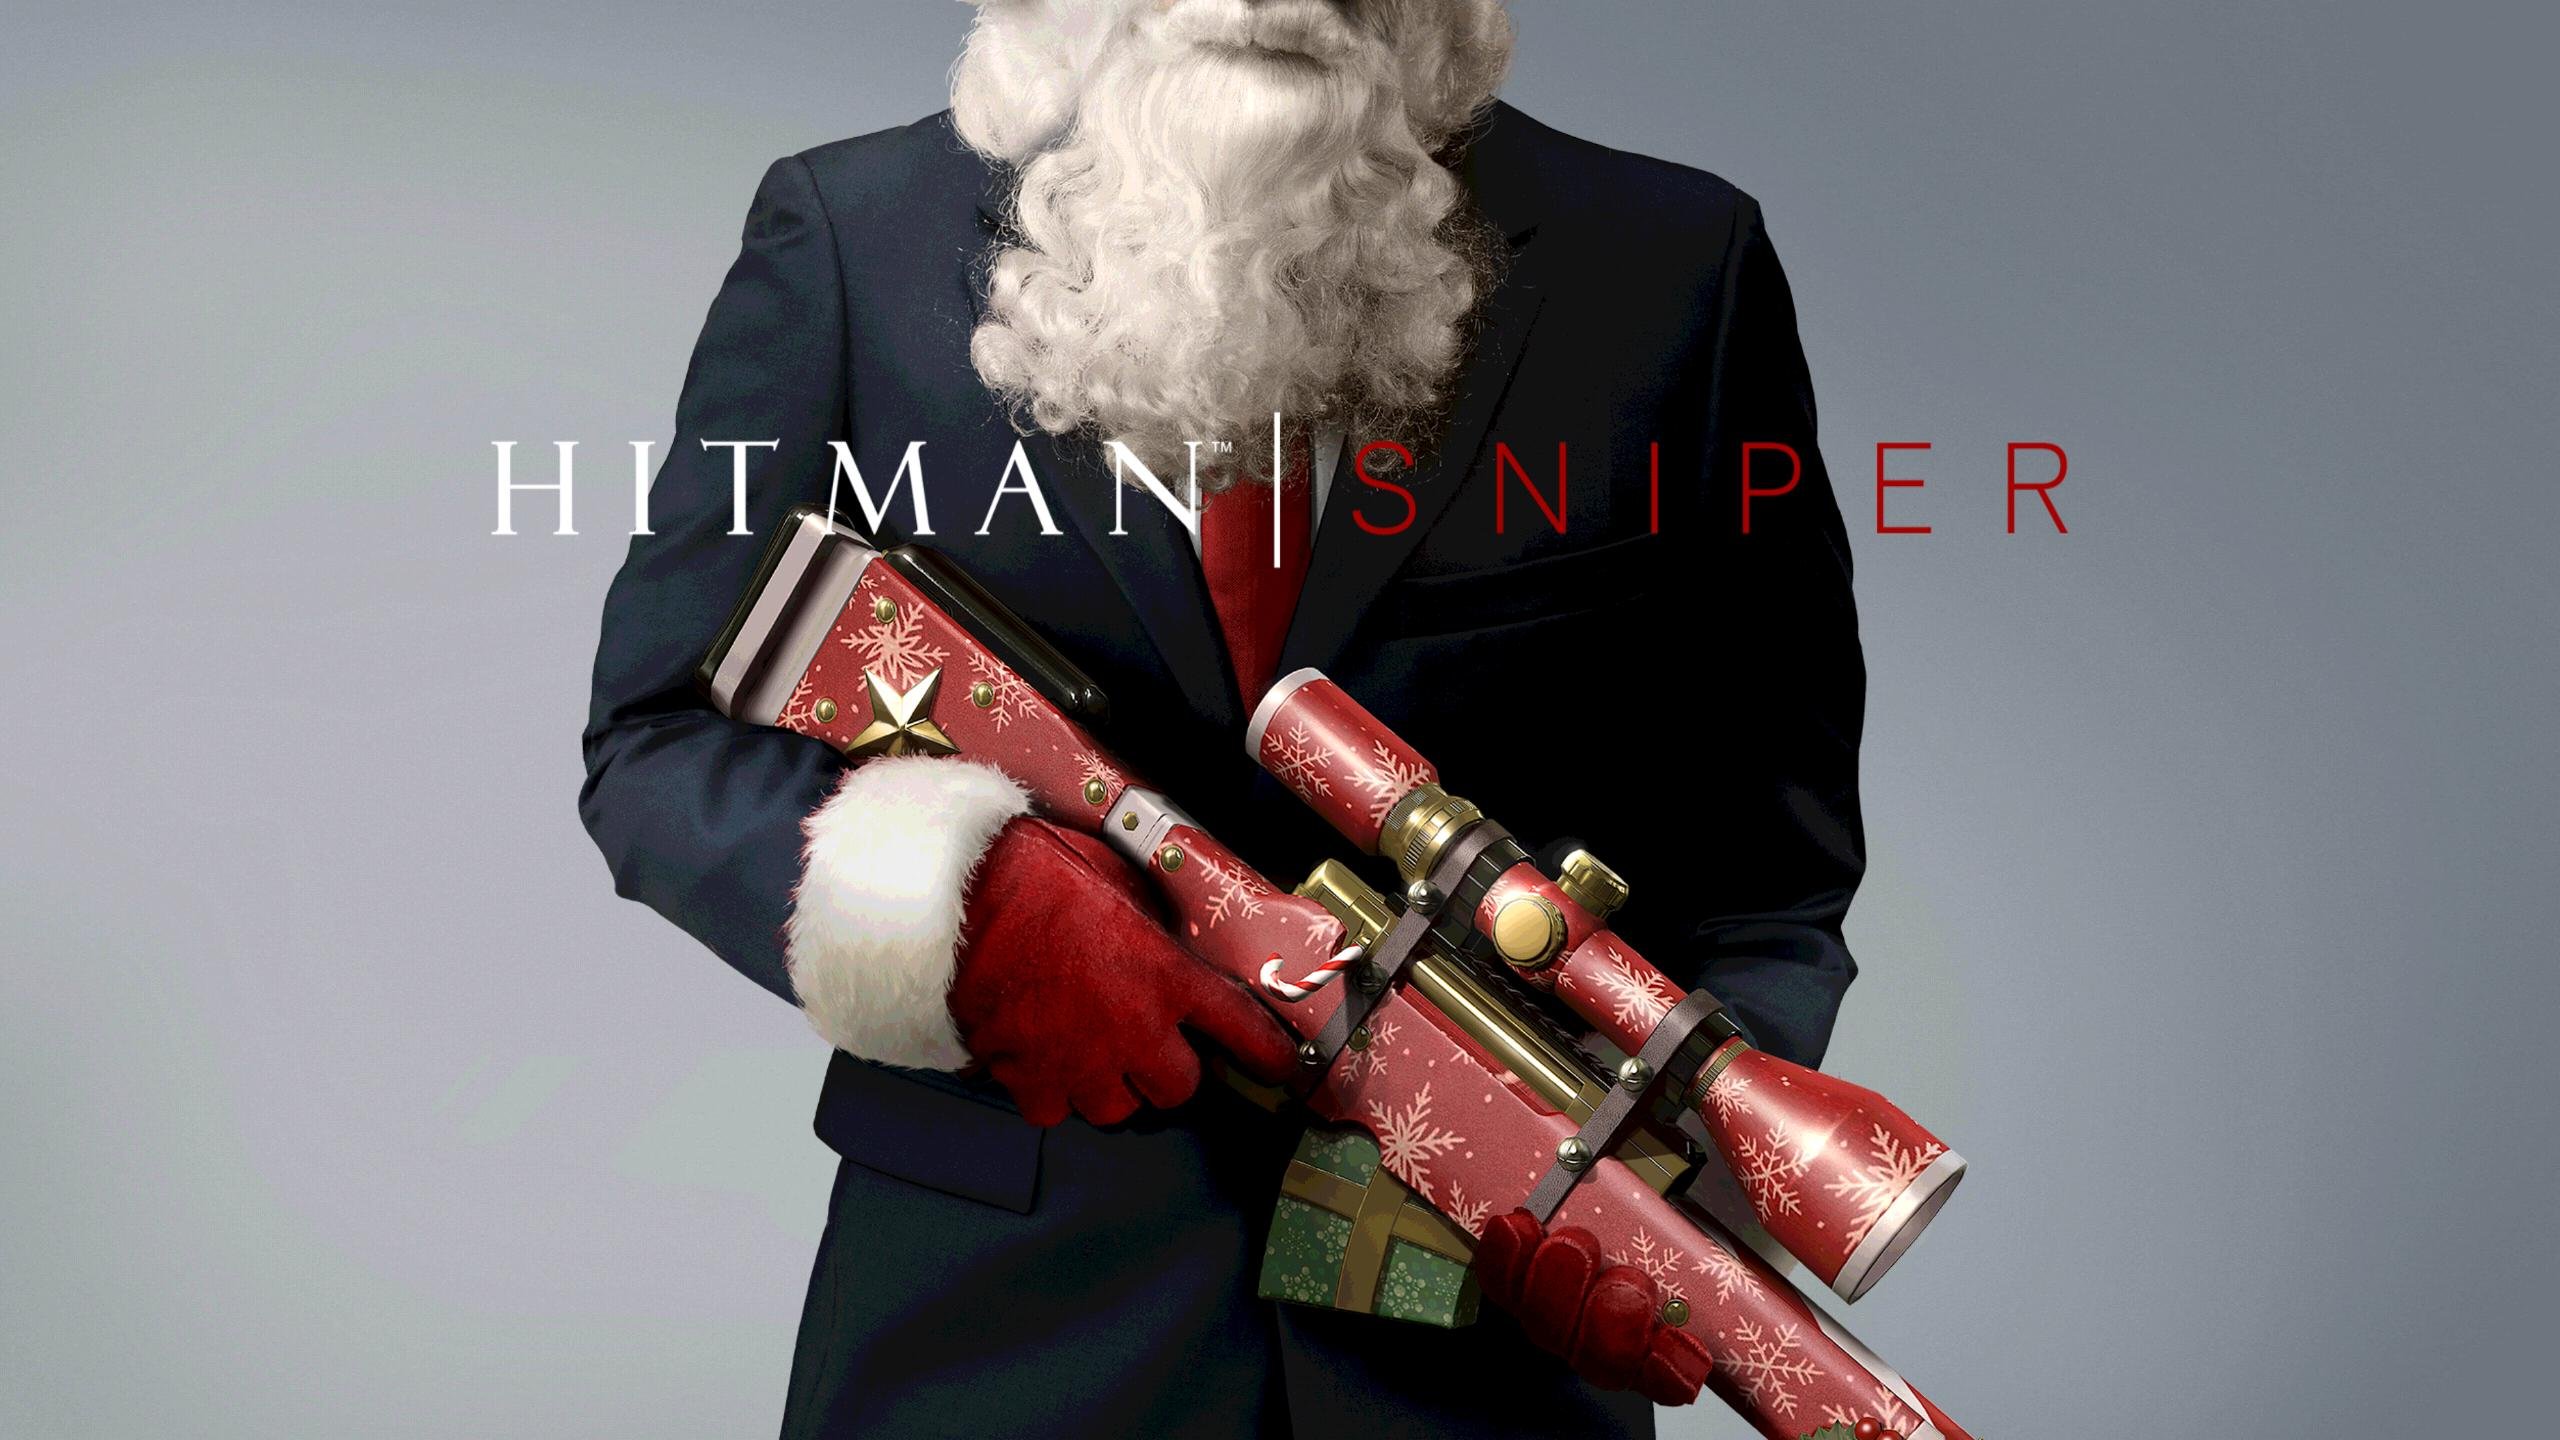 hitman, Assassin, Sniper, Warrior, Sci fi, Action, Fighting, Stealth, Assassins, Spy, Poster, Christmas Wallpaper